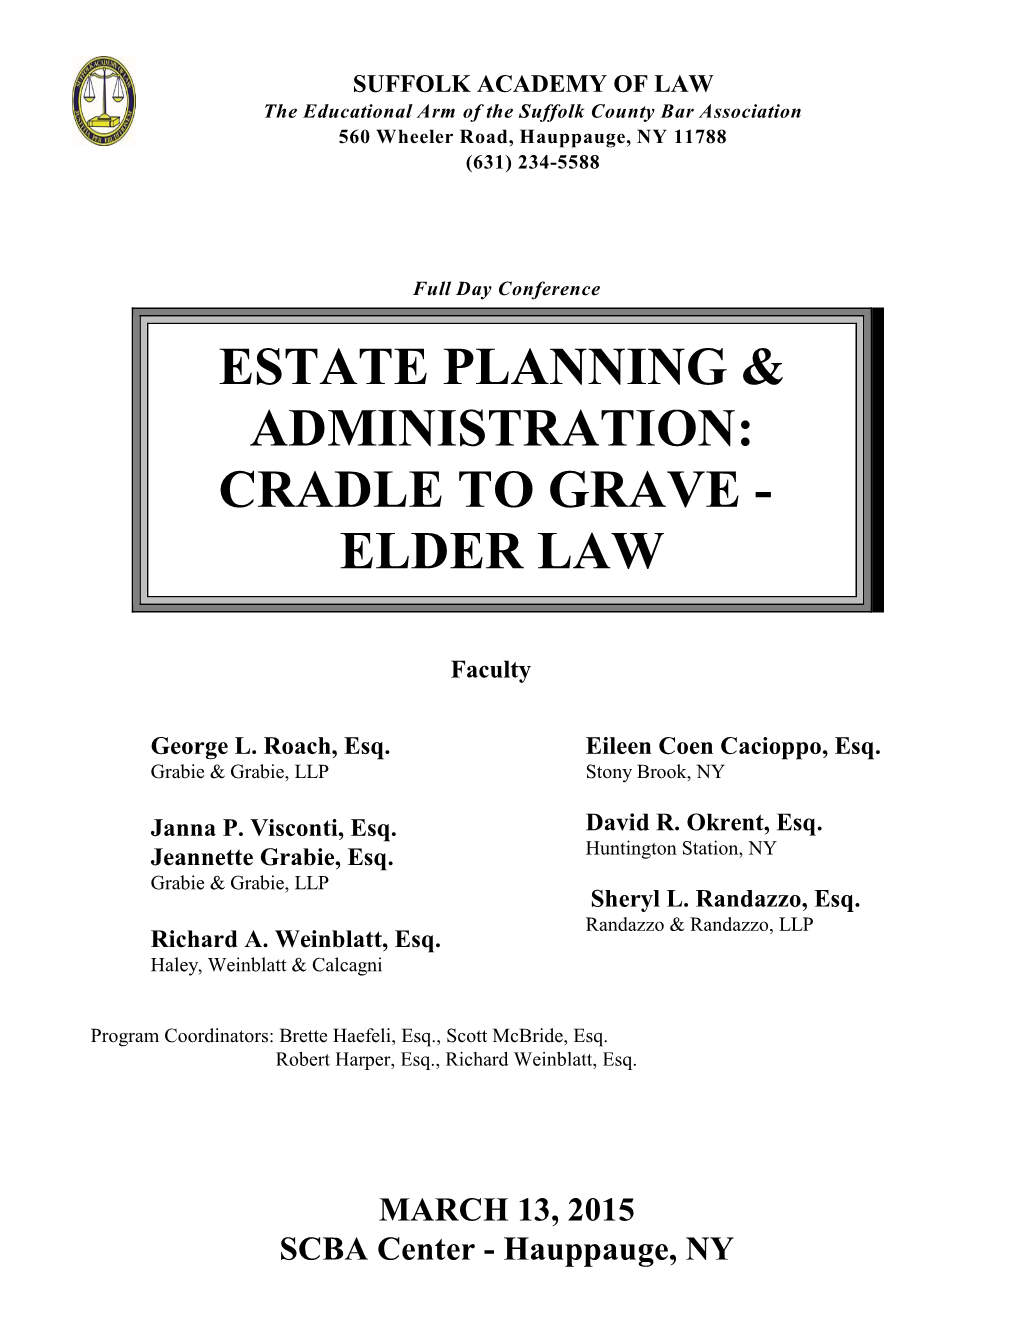 Estate Planning & Administration: Cradle to Grave